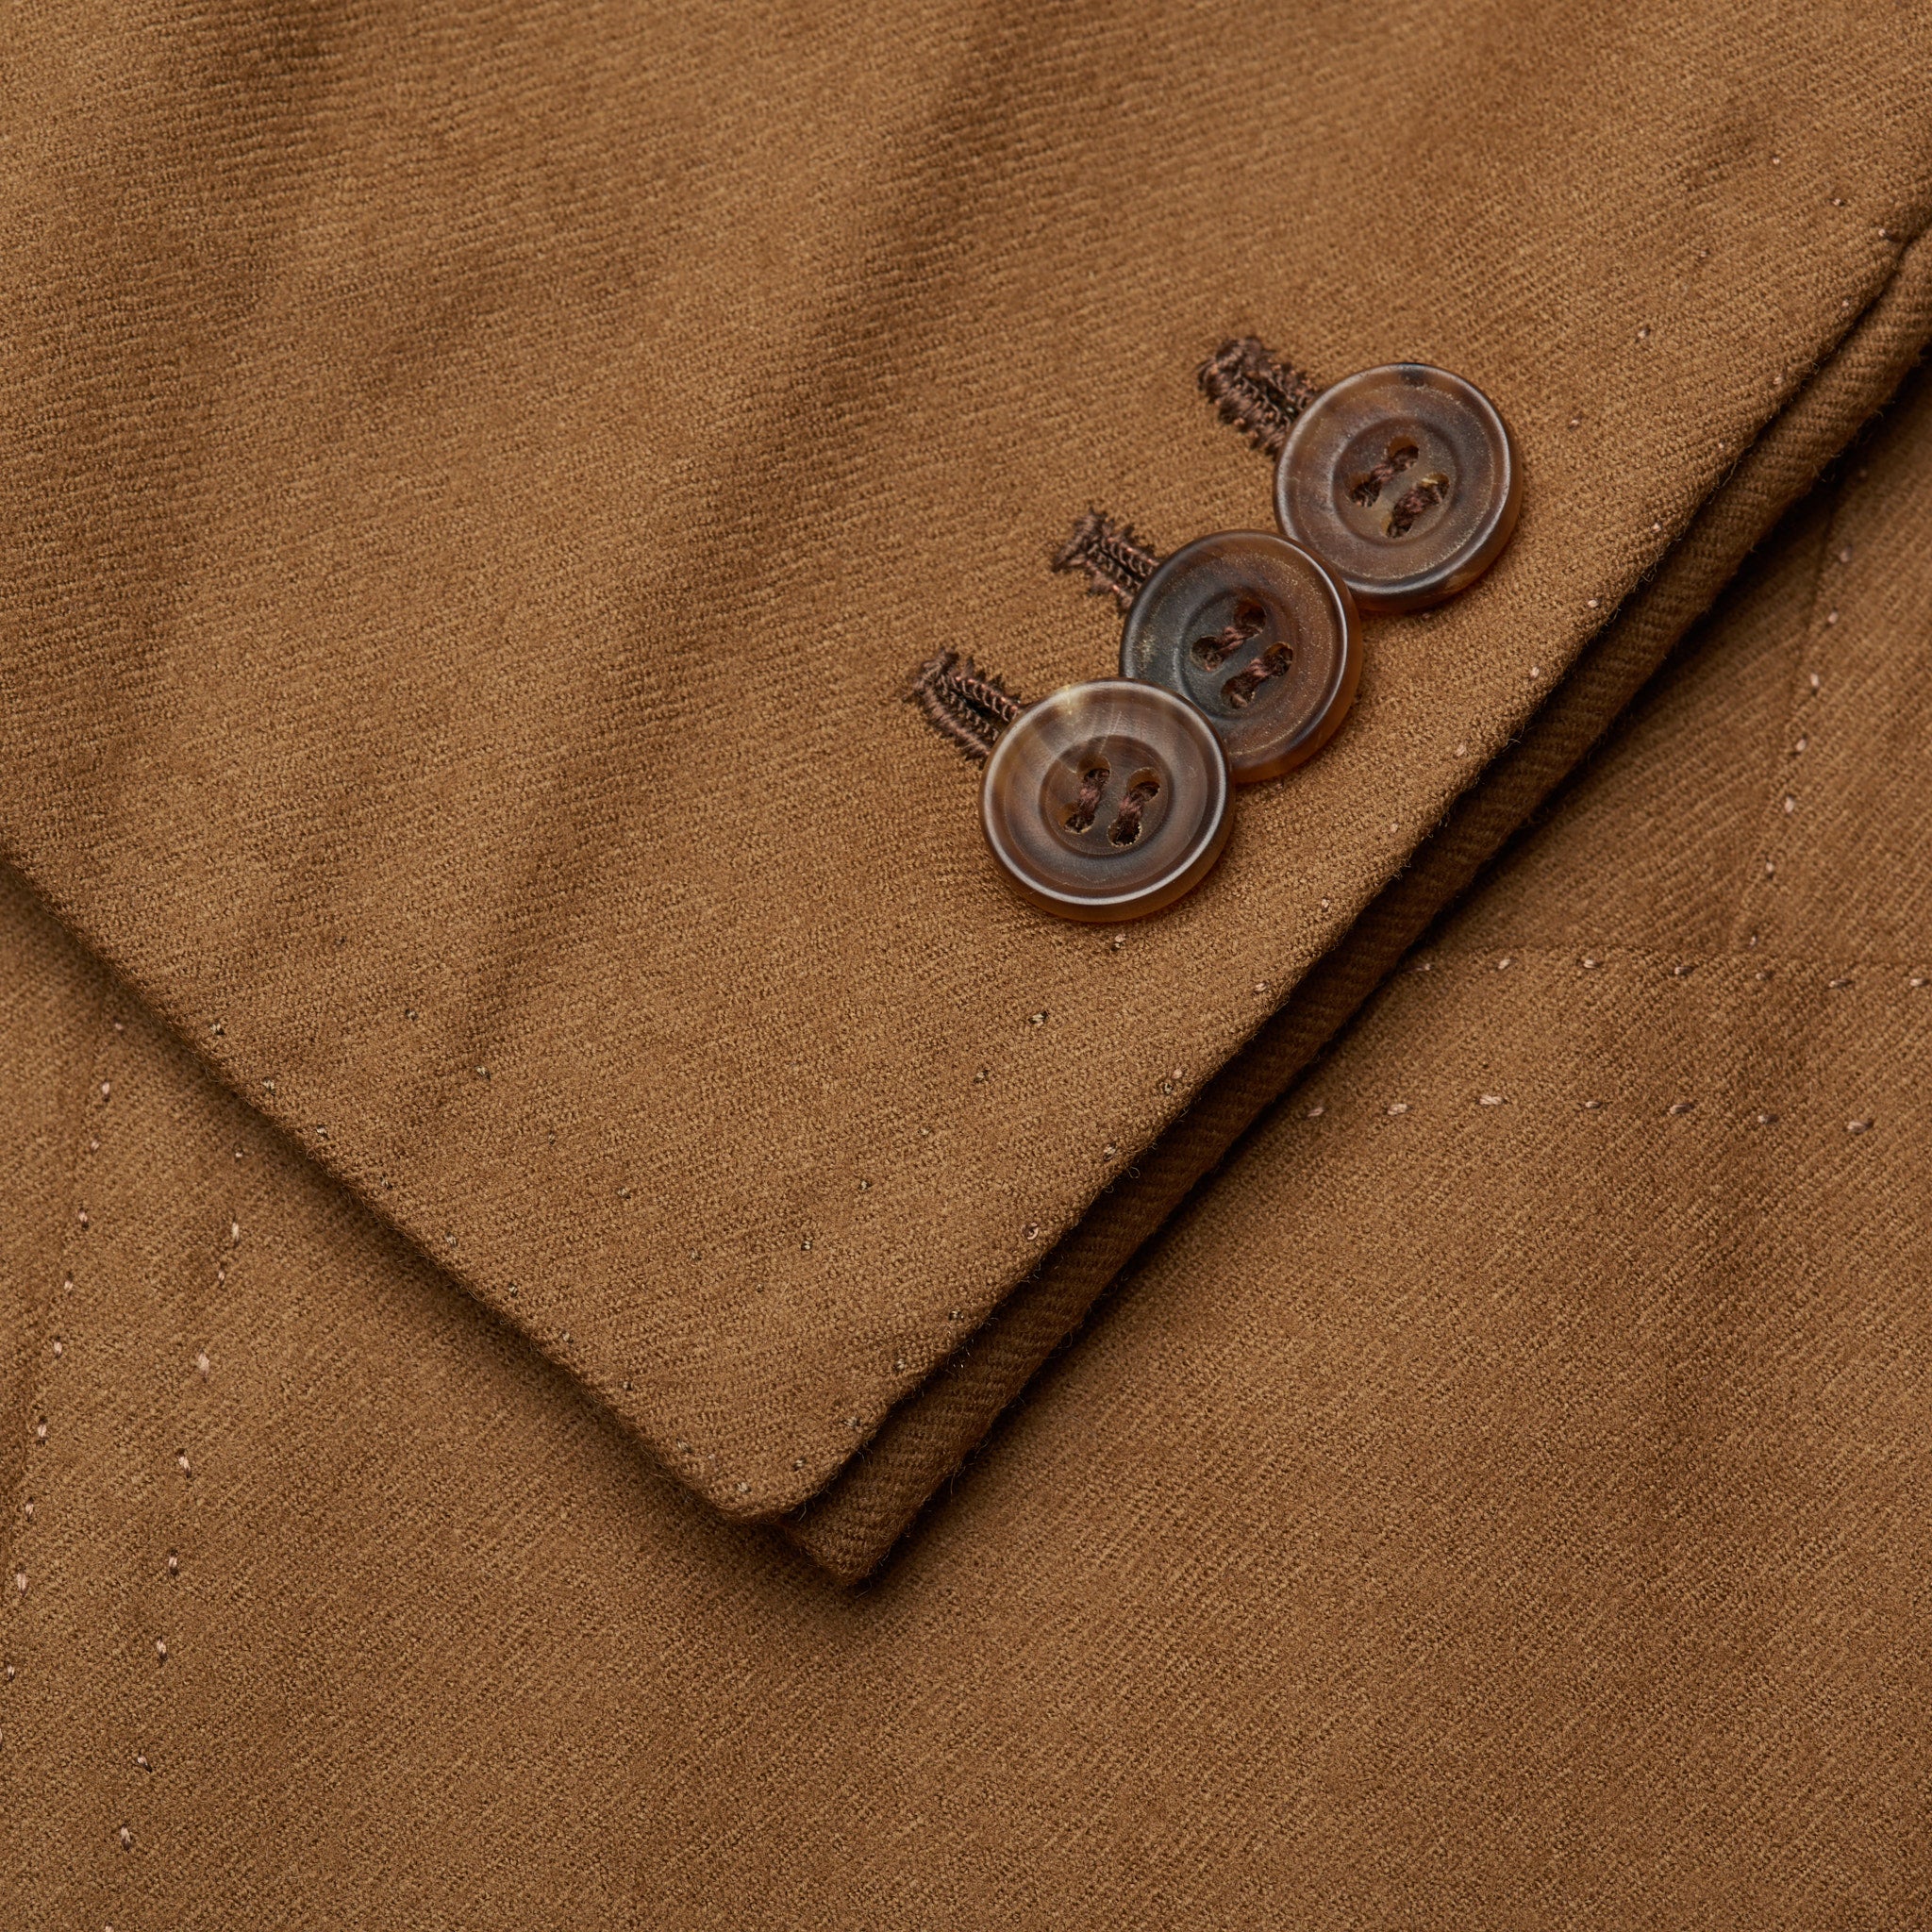 RUBINACCI LH Bespoke Hand-Stitched Khaki Wool Camelhair Jacket EU 50 NEW US 40 RUBINACCI